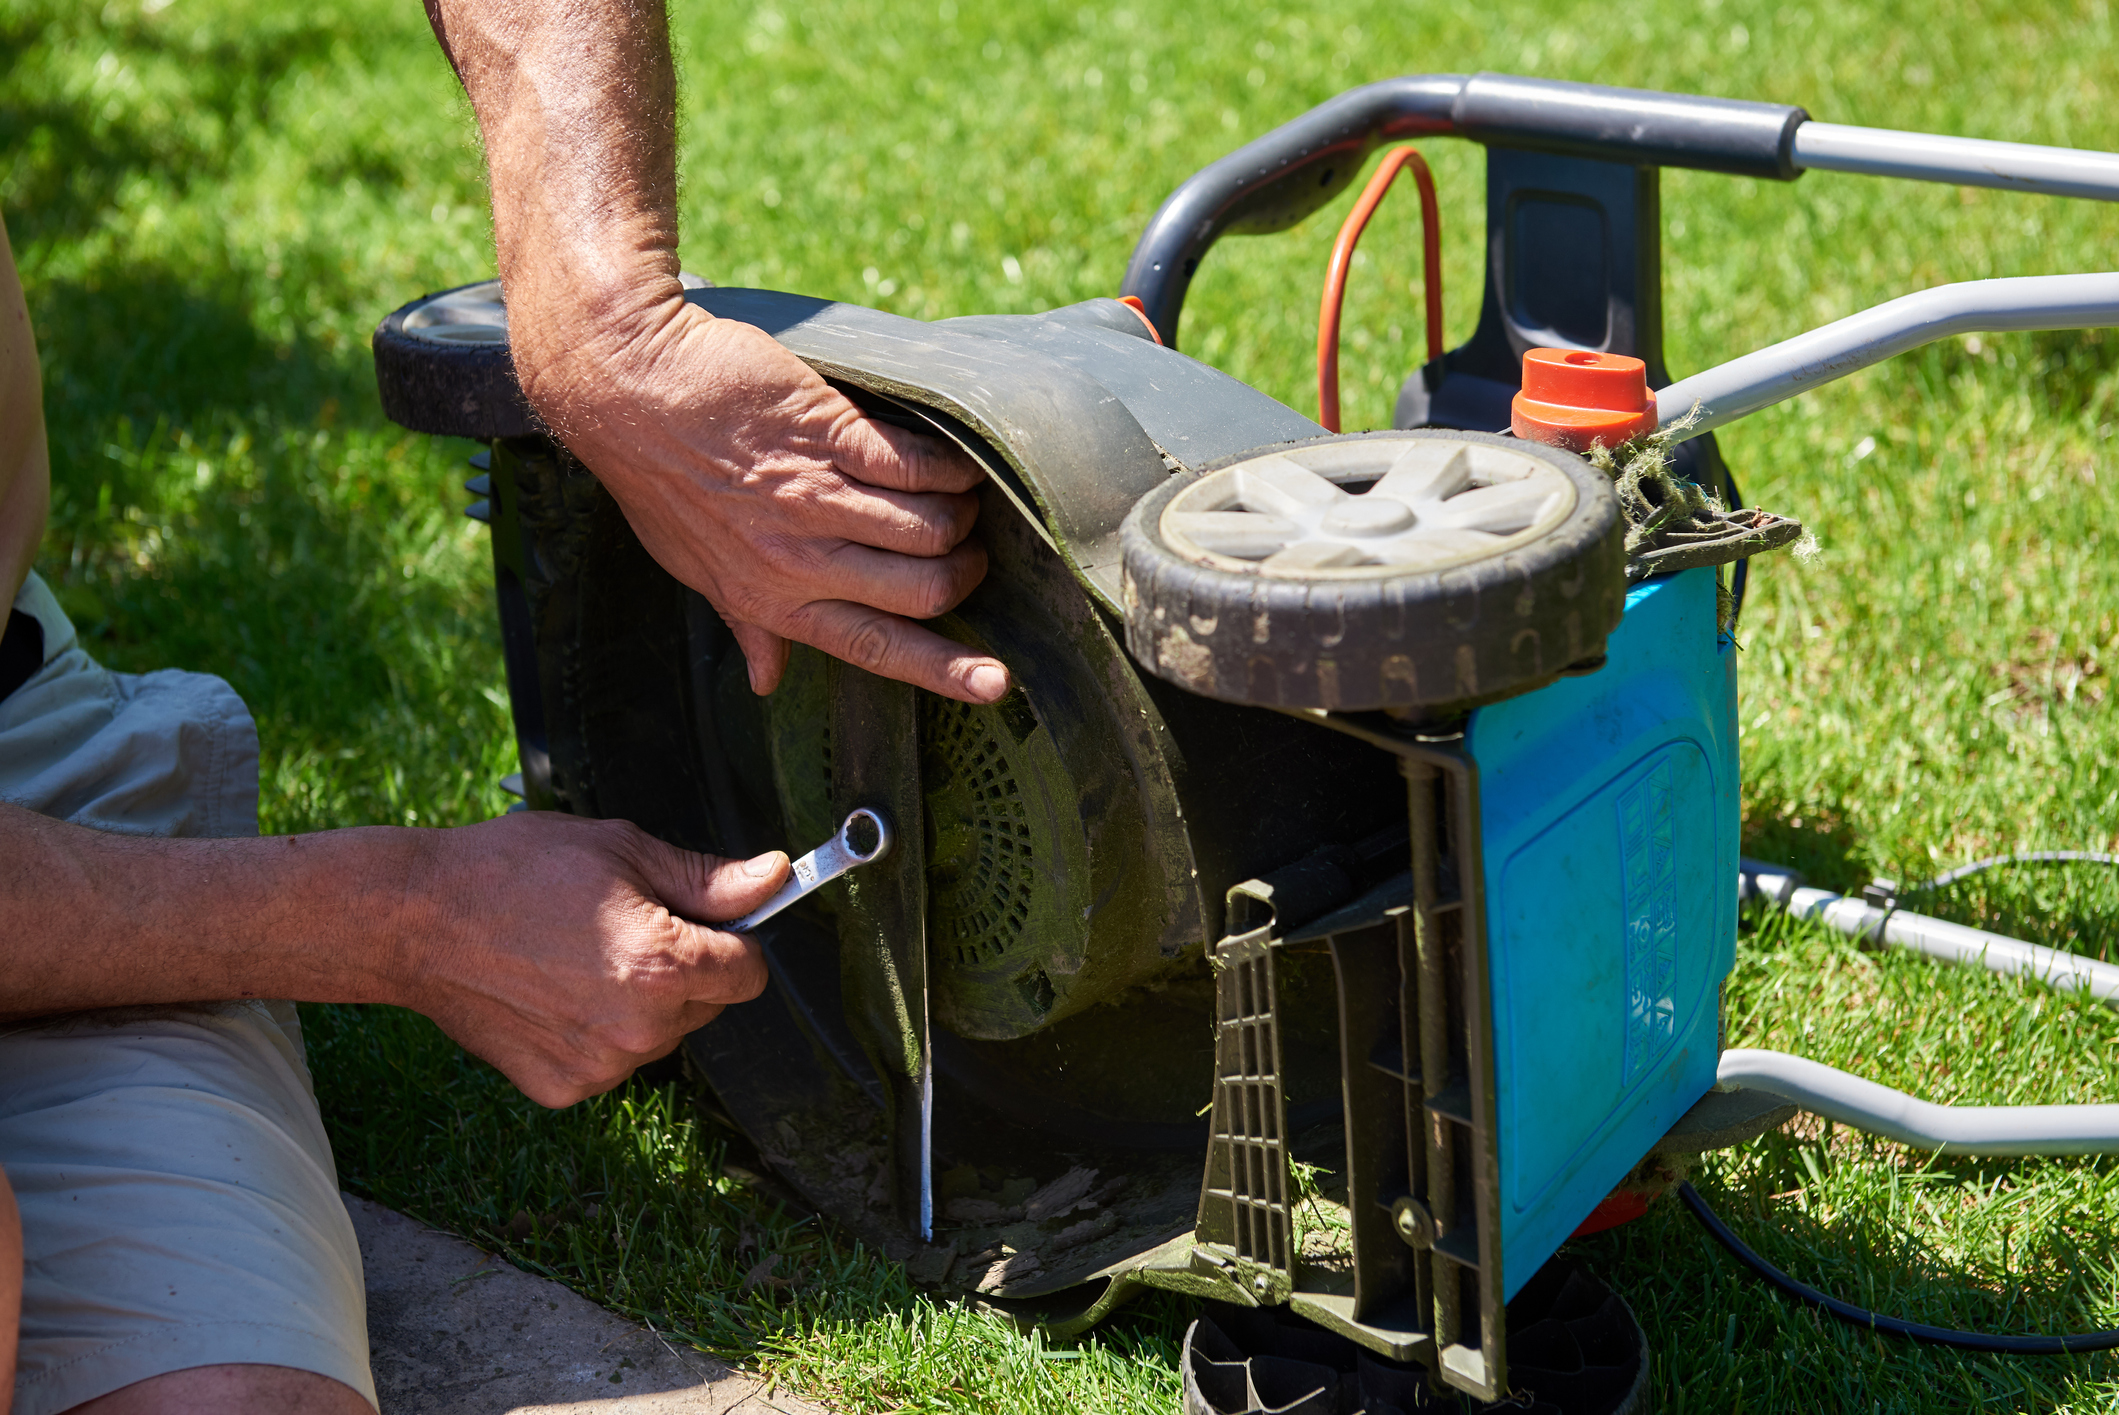 Fixing lawn mower